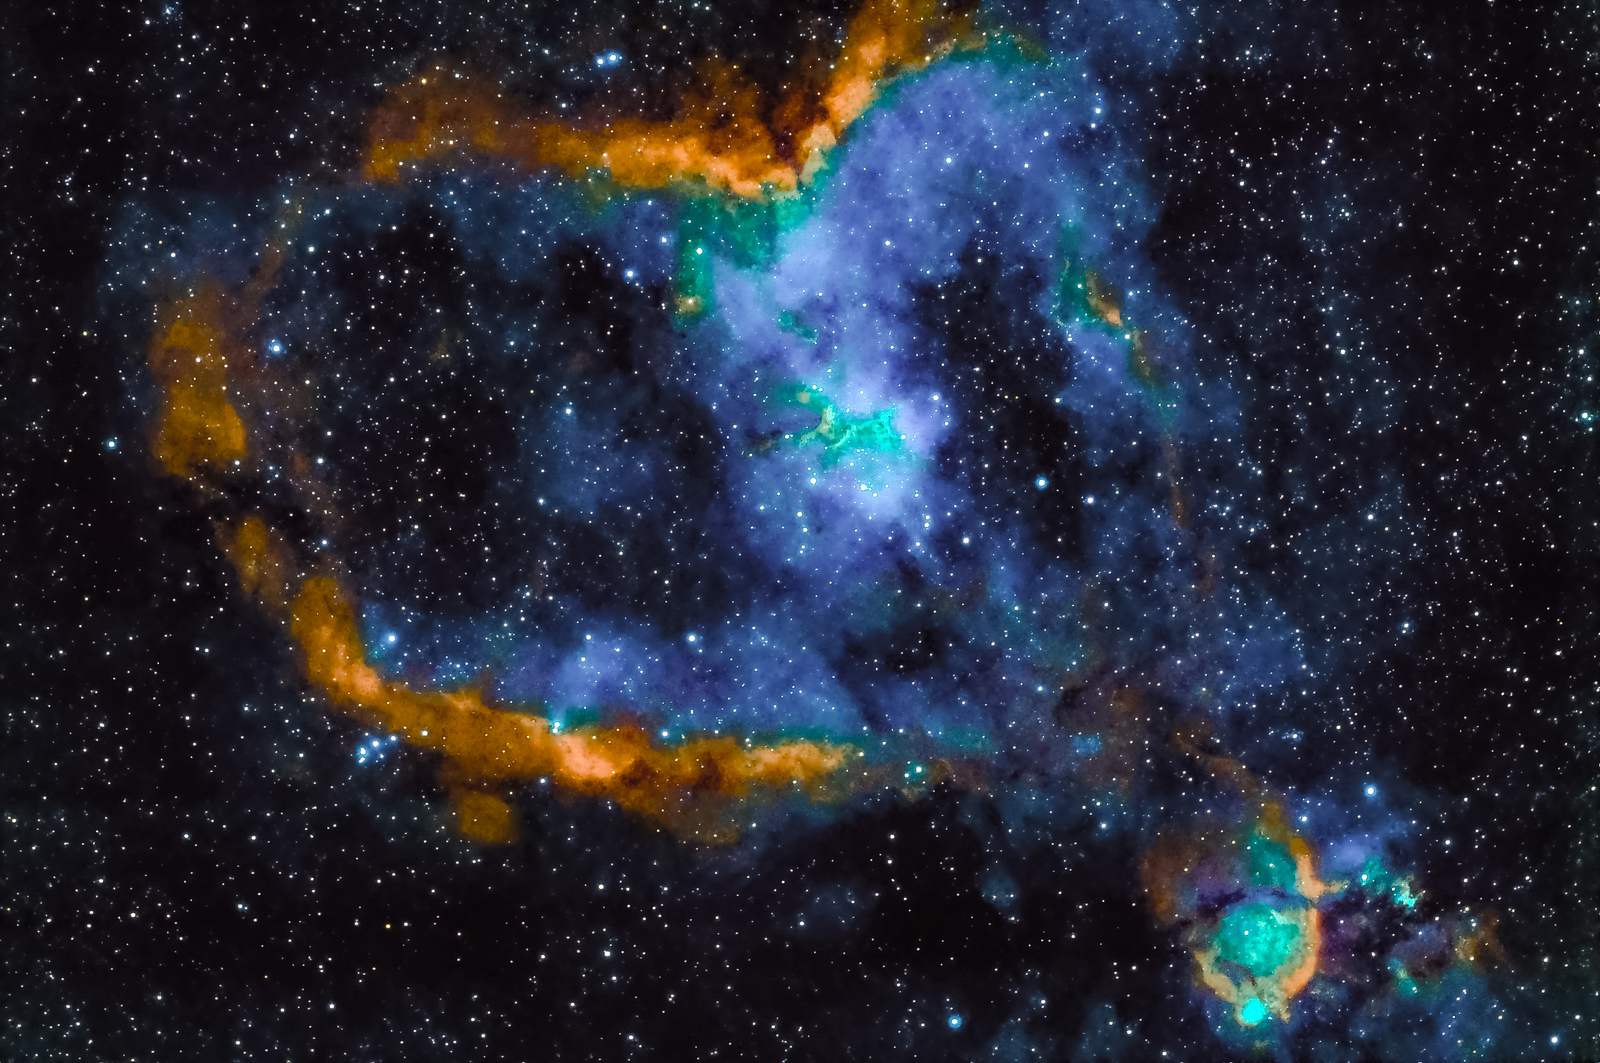 Heart nebula, Ha - OIII